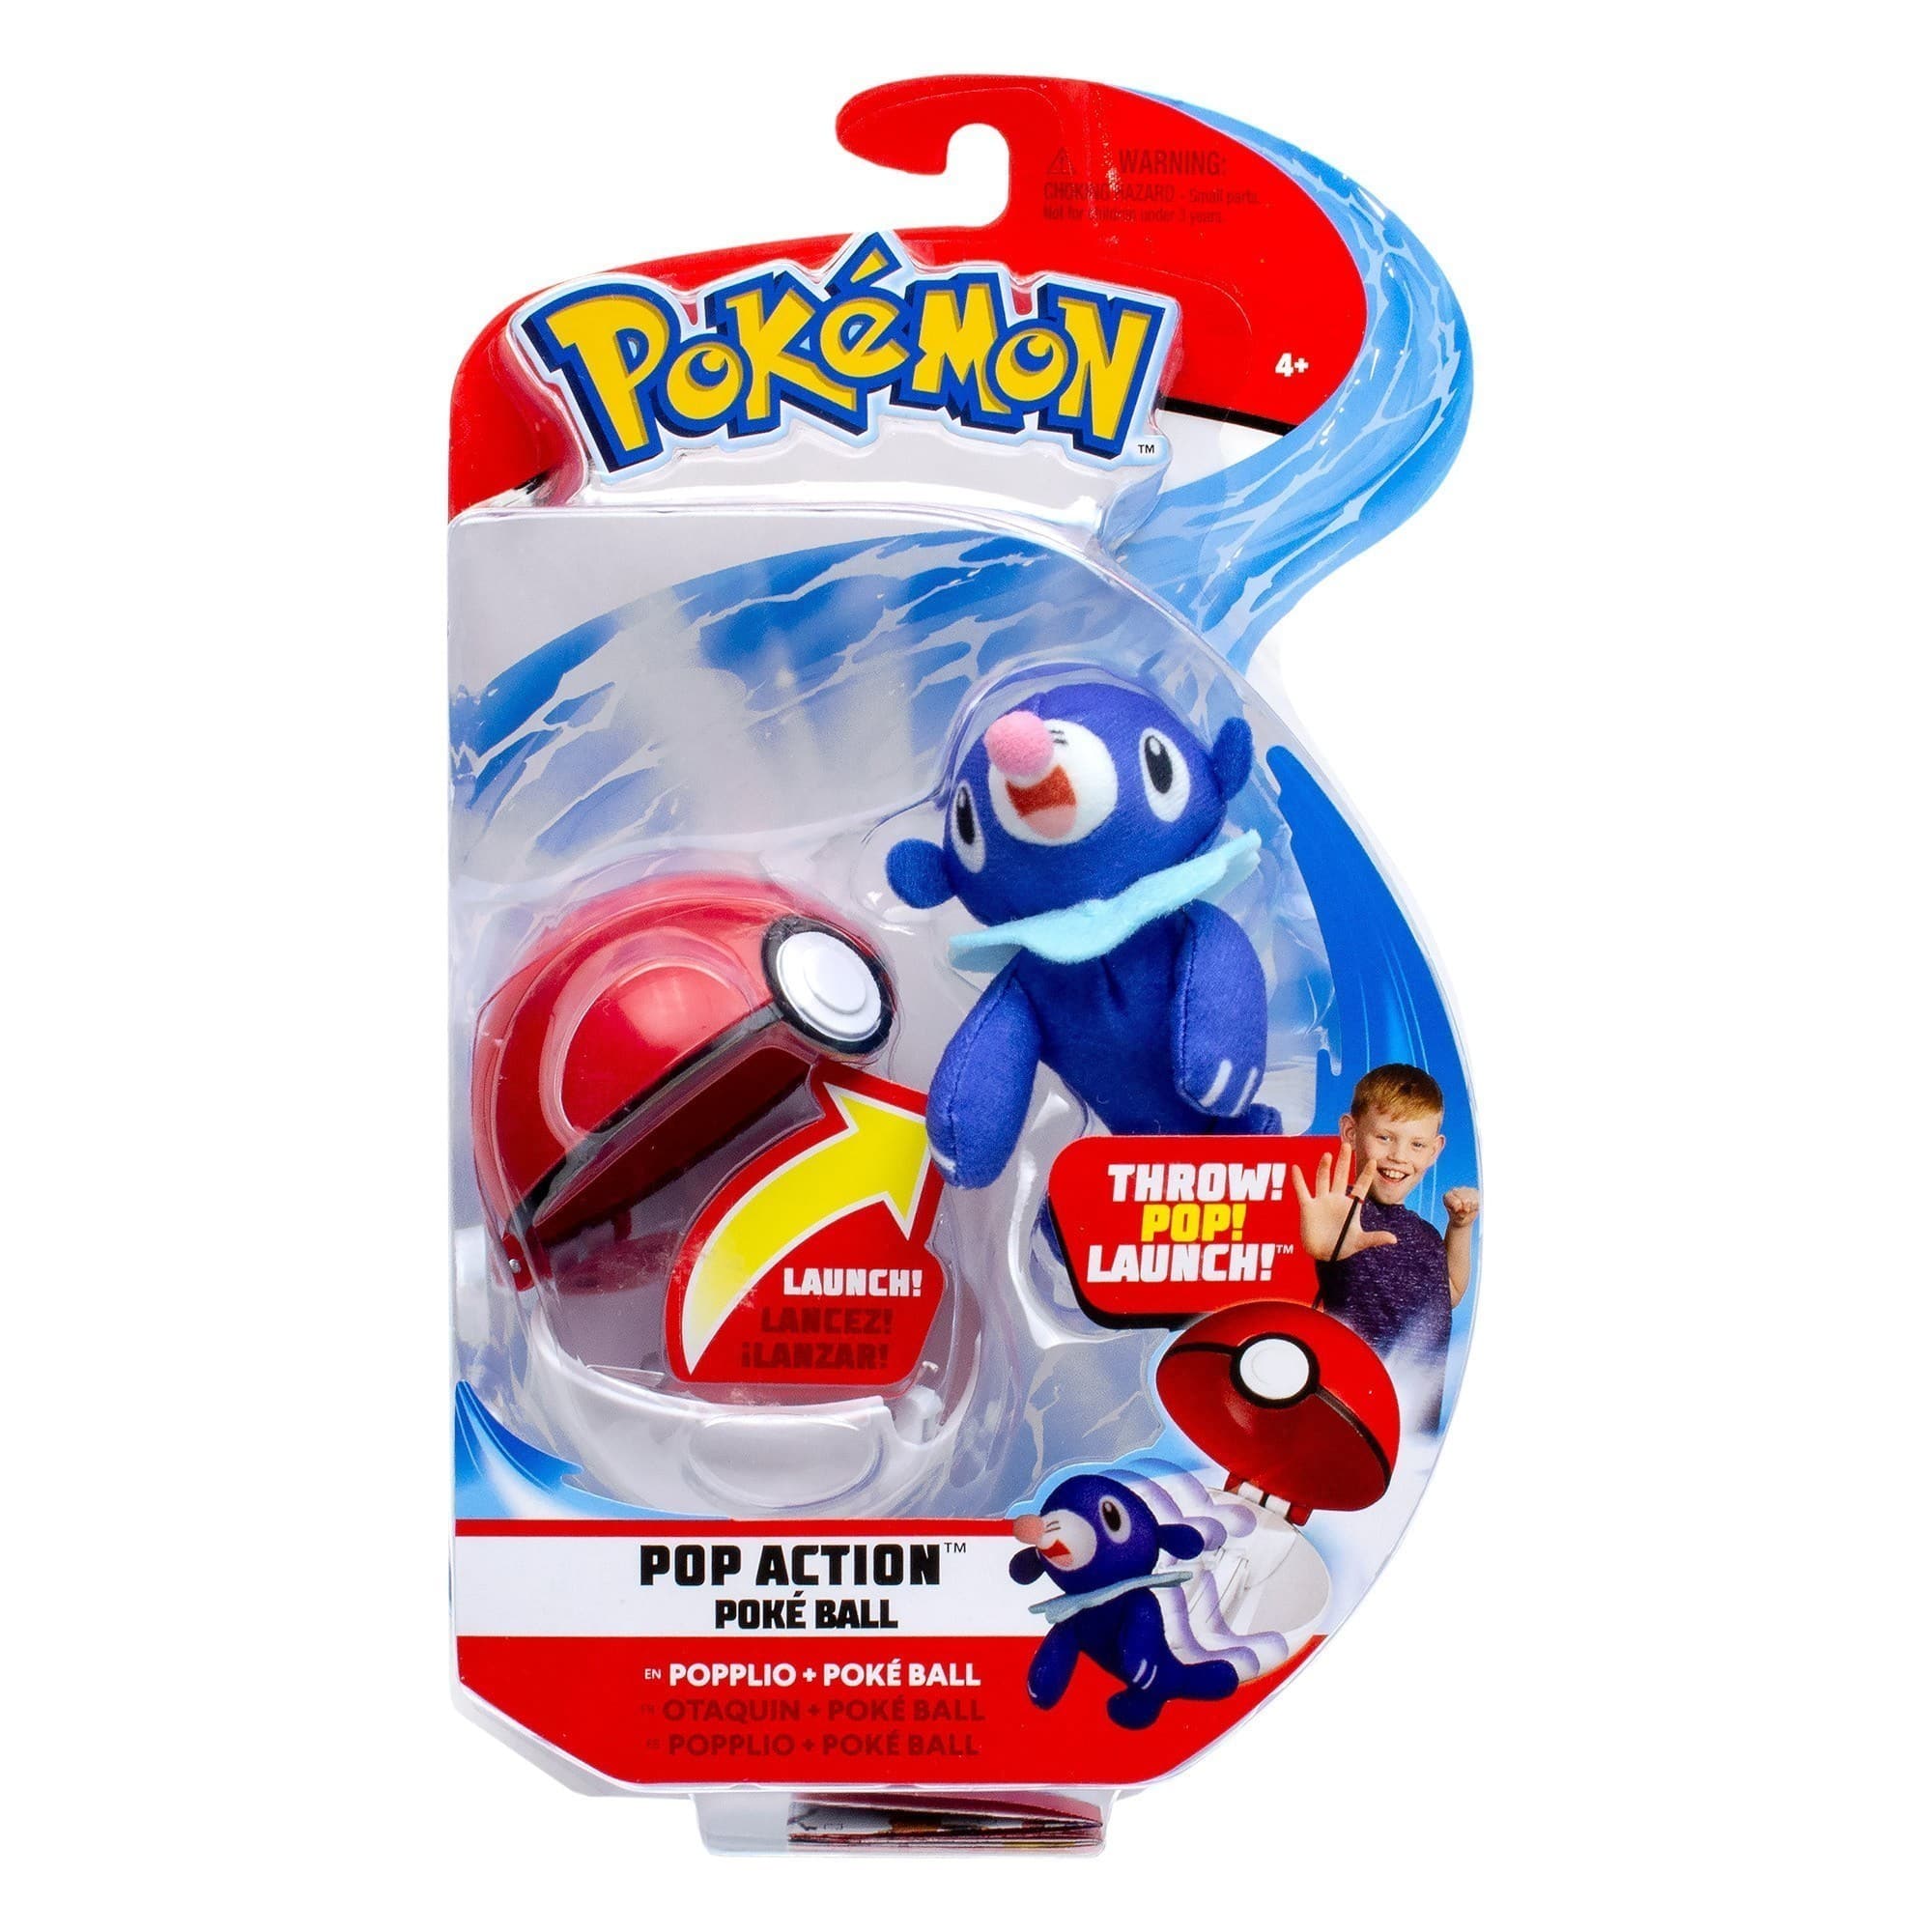 Pokémon - Pop Action Poké Ball - Popplio Poke Ball